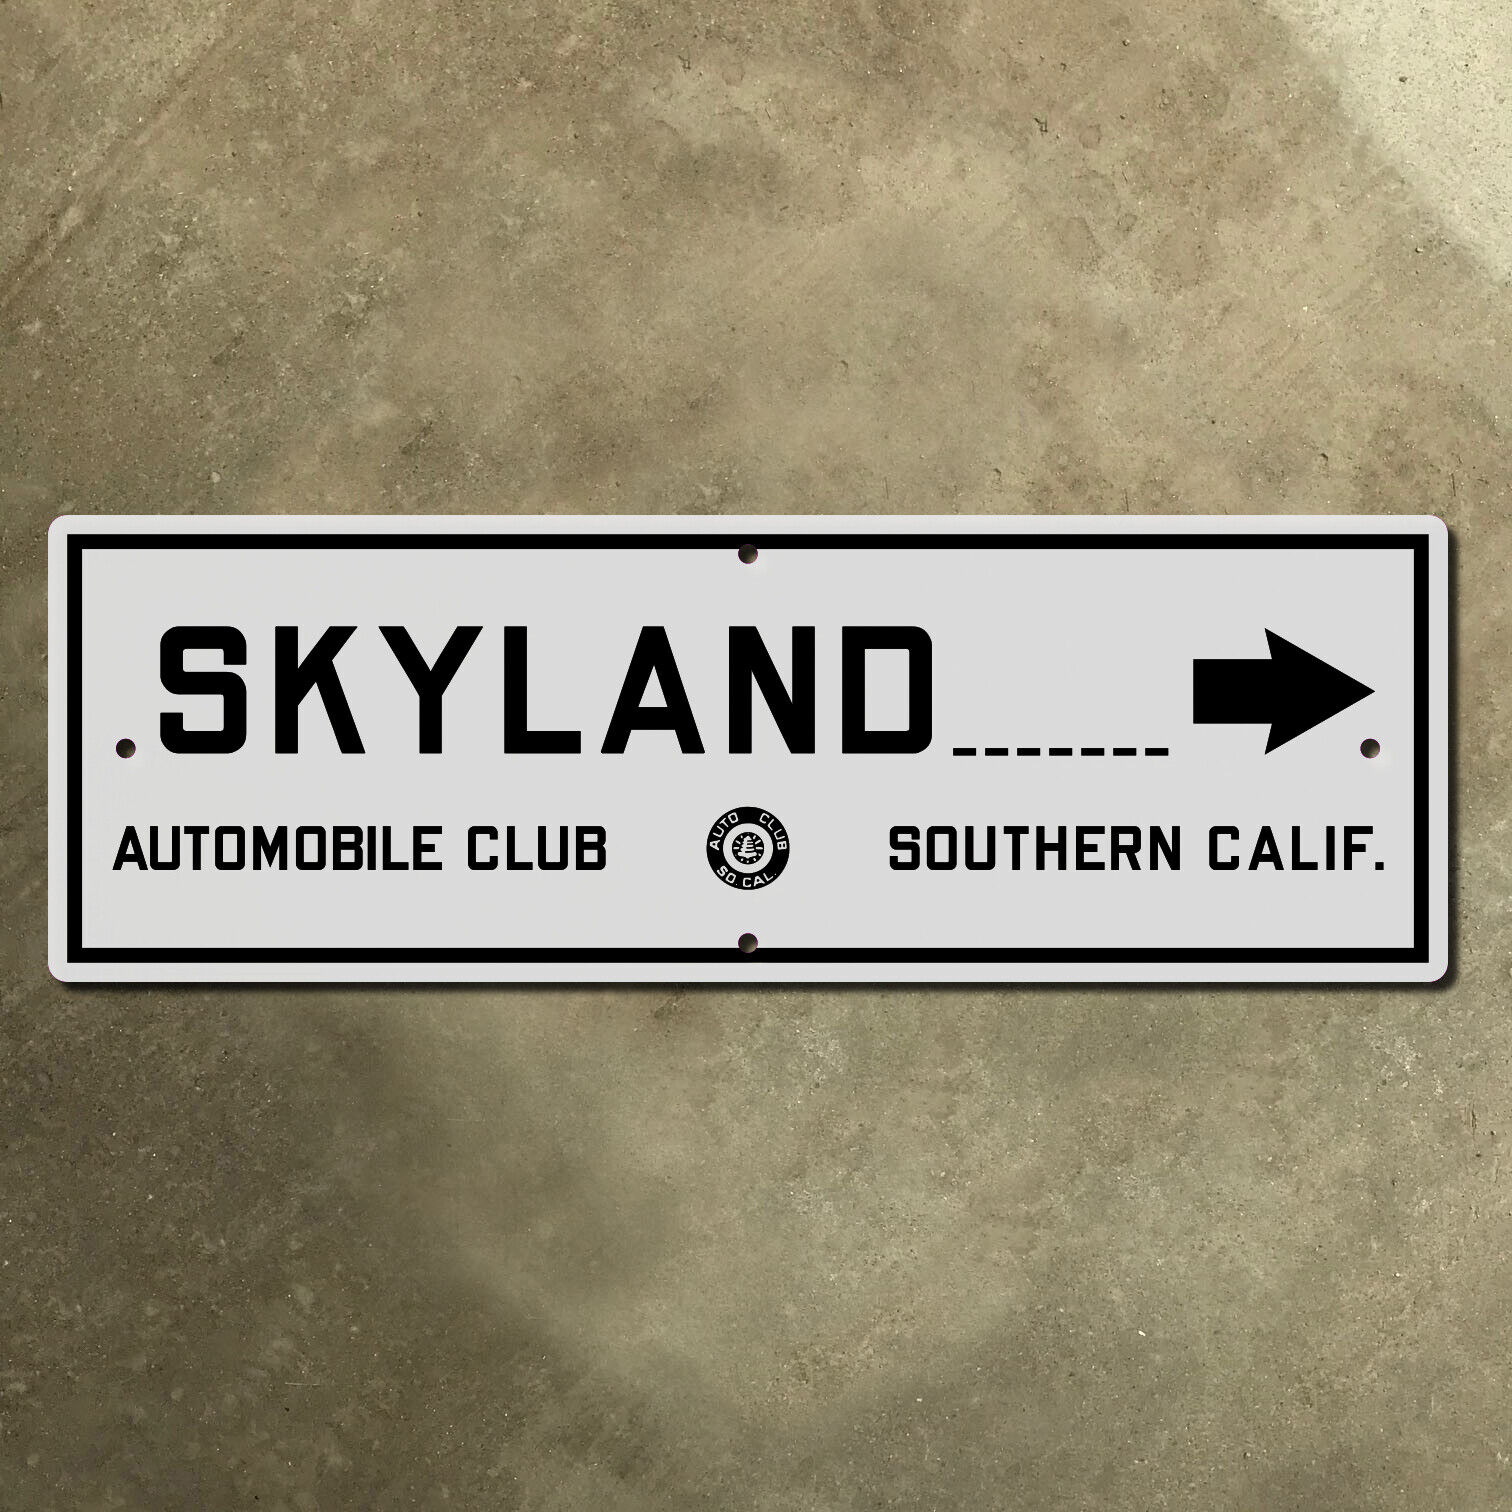 ACSC Skyland highway road sign California Lake Arrowhead 1929 36x12